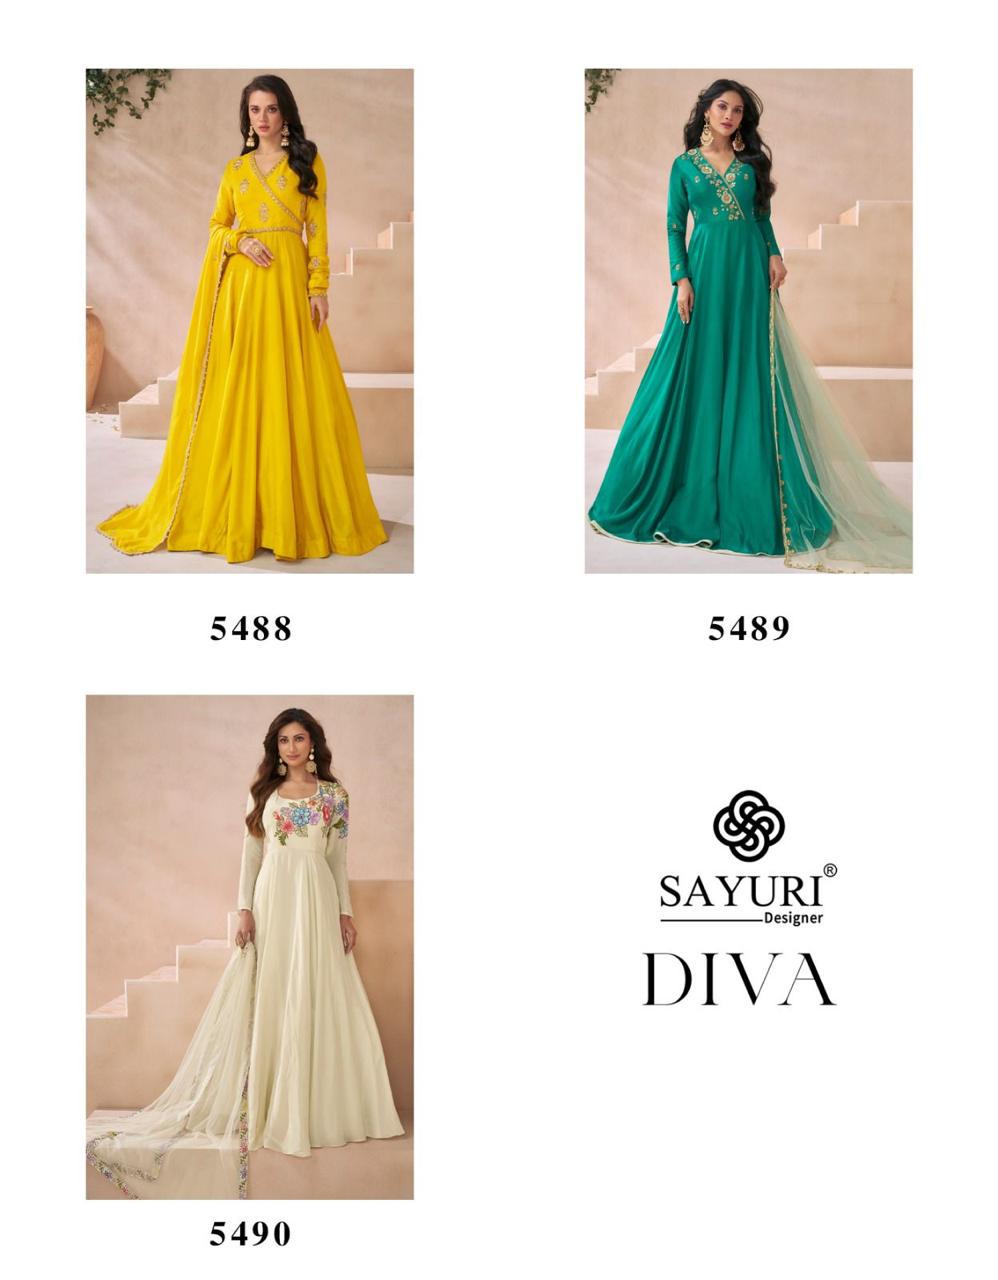 Sayuri Diva collection 4